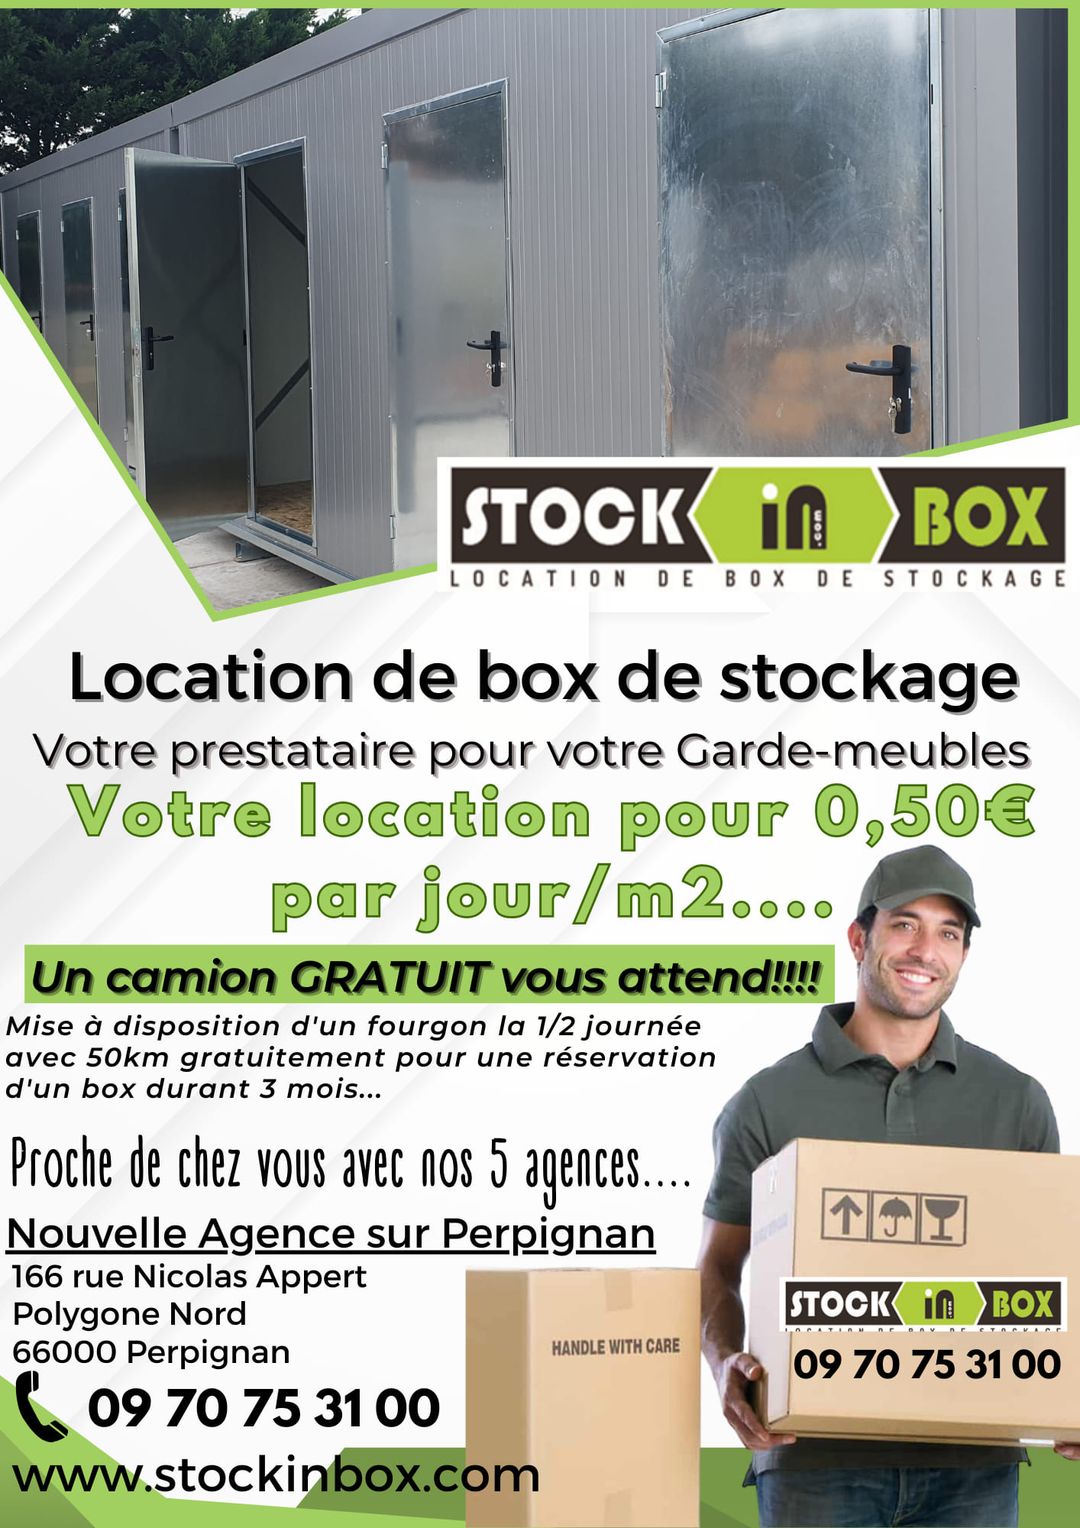 Brochure-Stockinbox-Perpignan.jpg